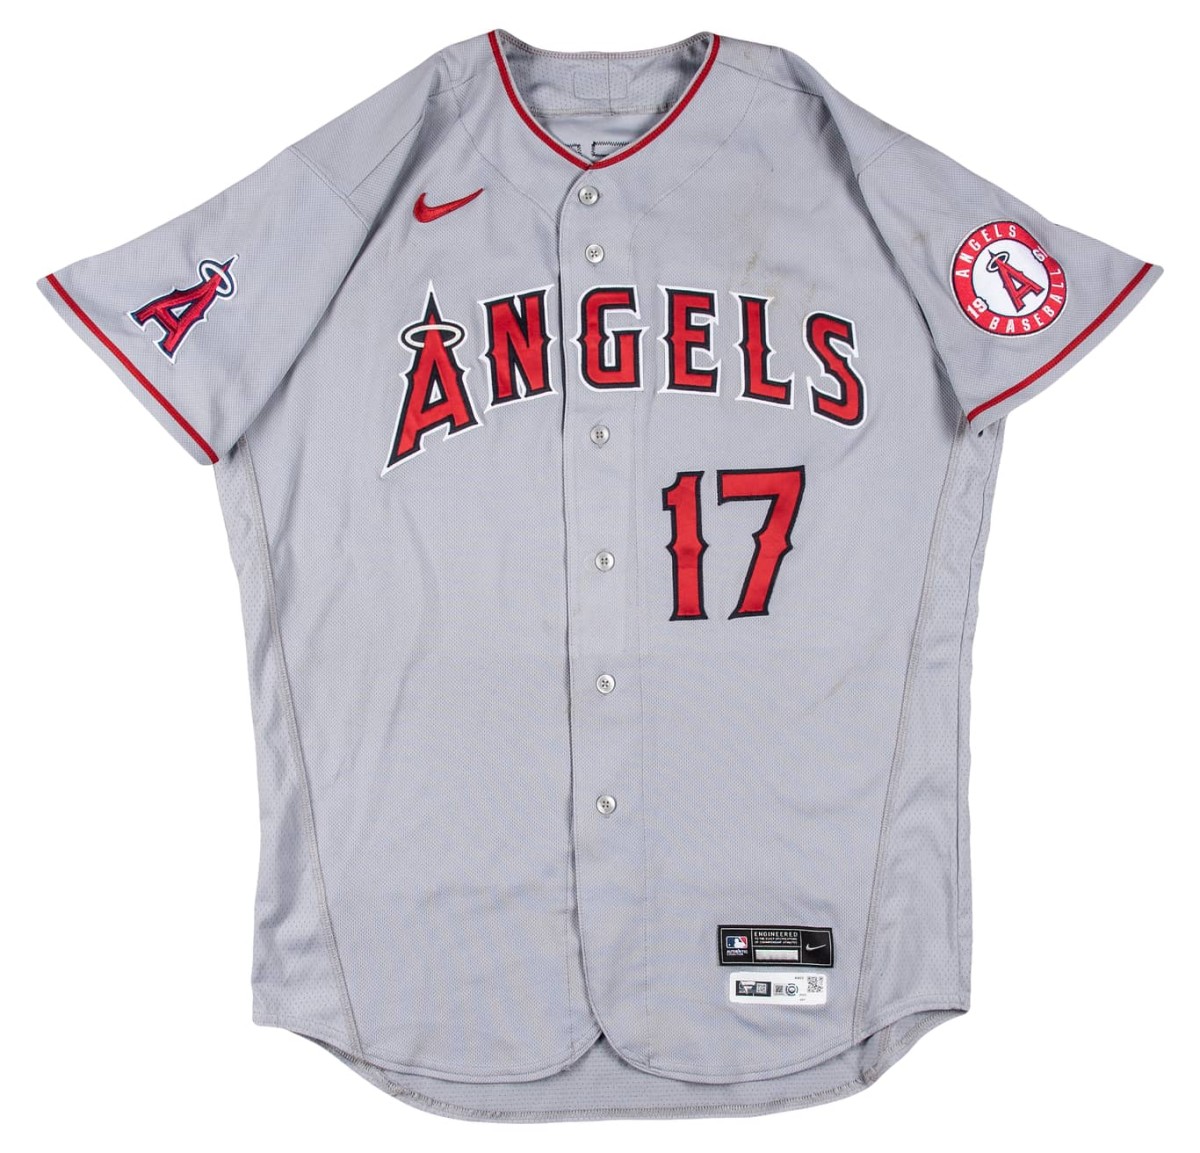 Major League Alumni Marketing Mike Trout Autographed White Authentic Angels Jersey